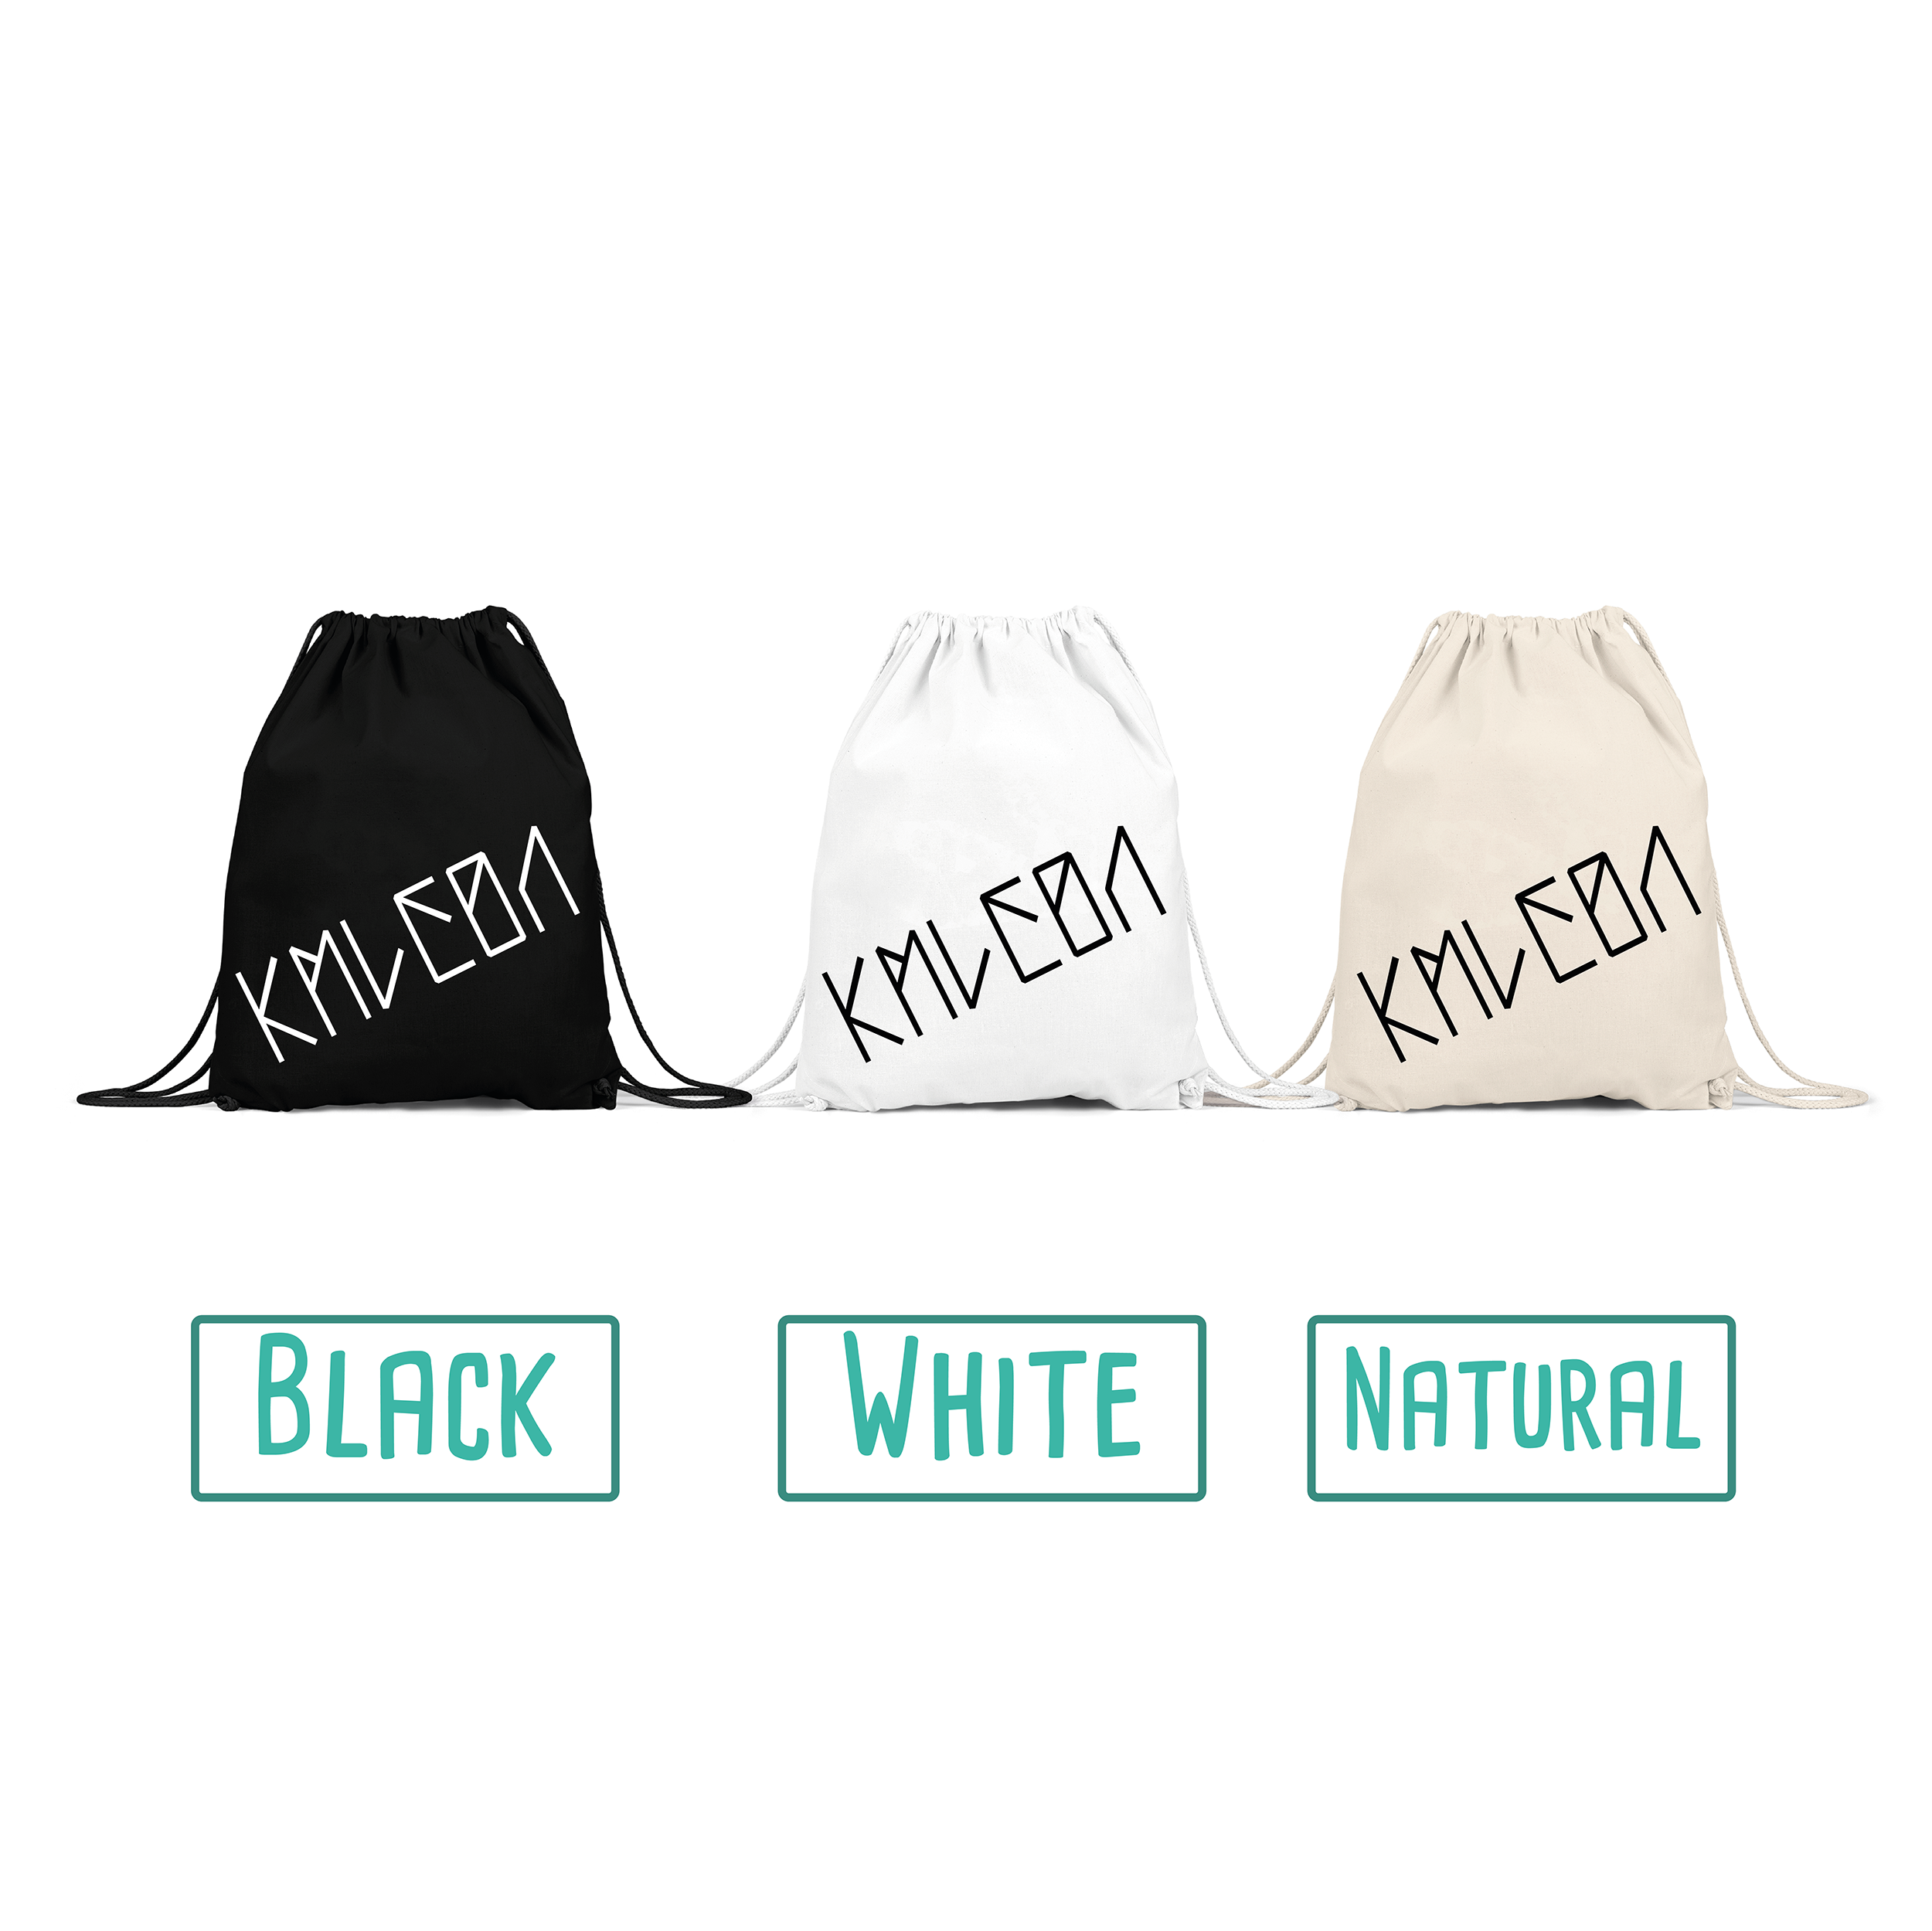 Colour options for backpacks by KMLeon.